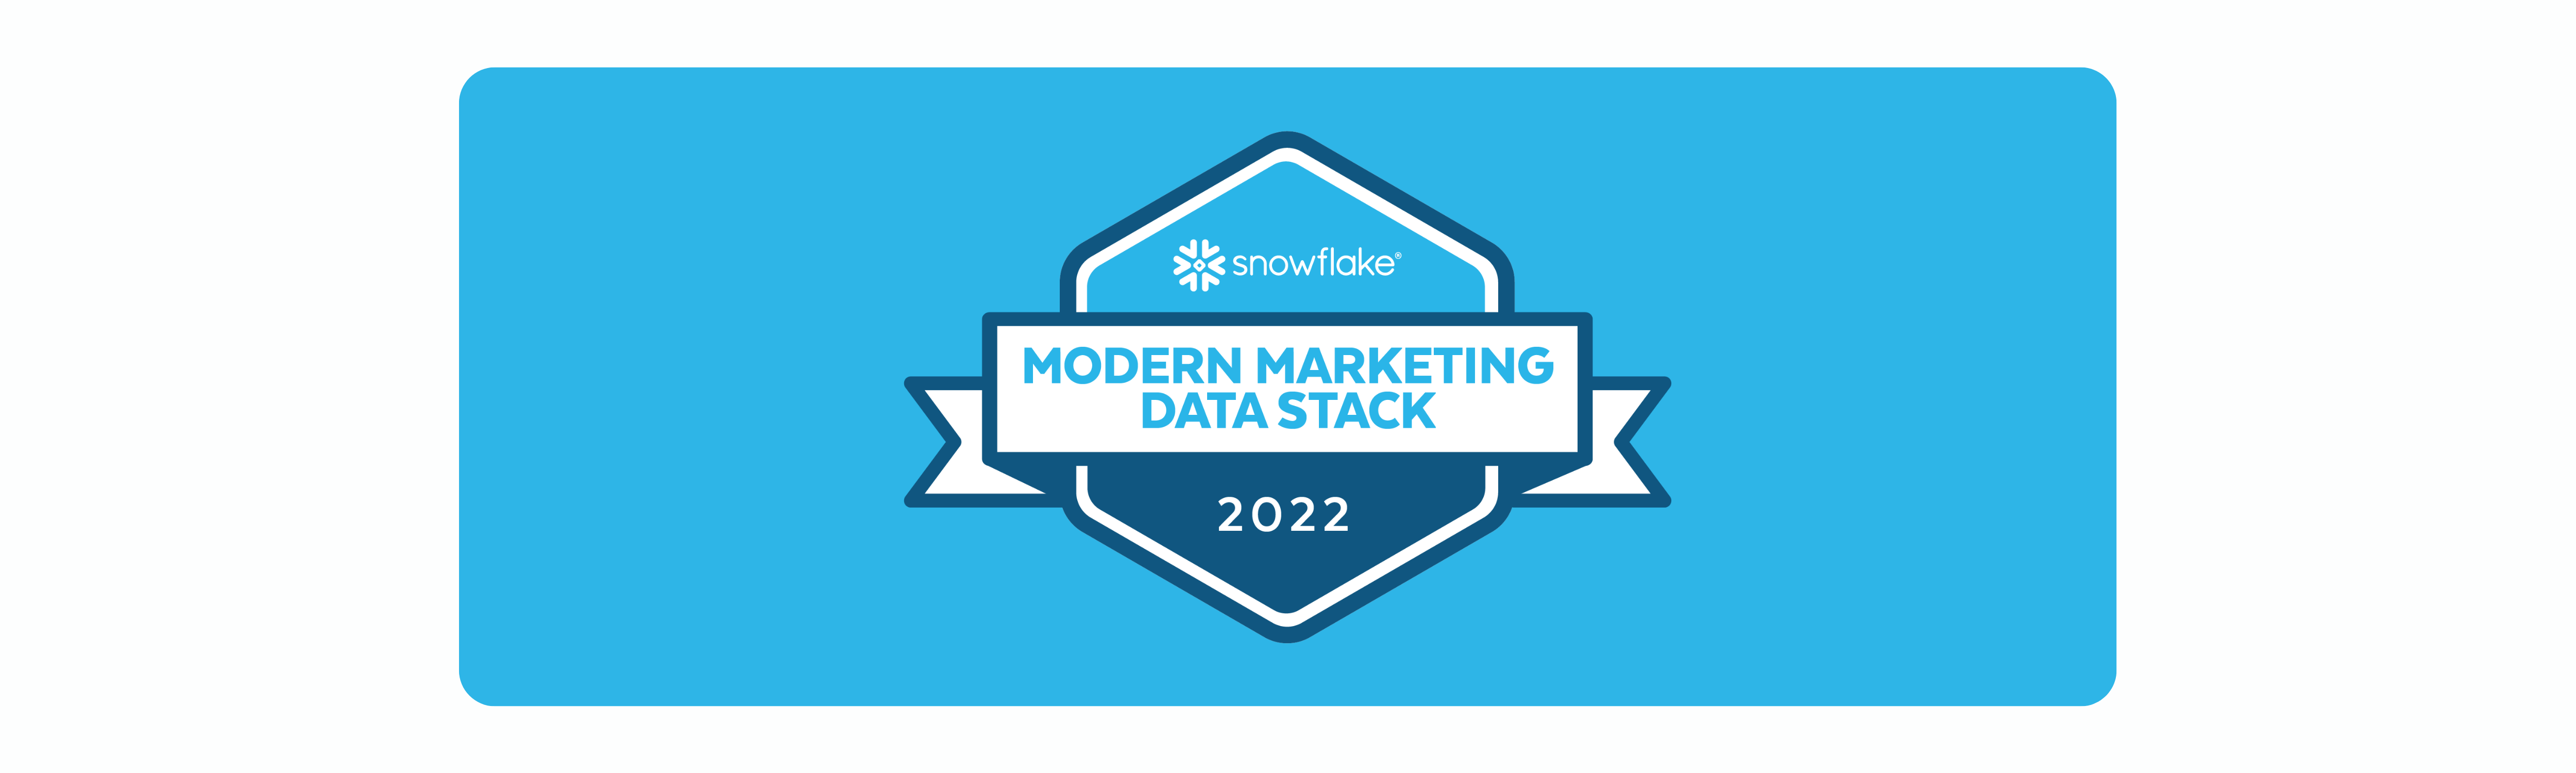 IPinfo and Snowflake Modern Marketing Report